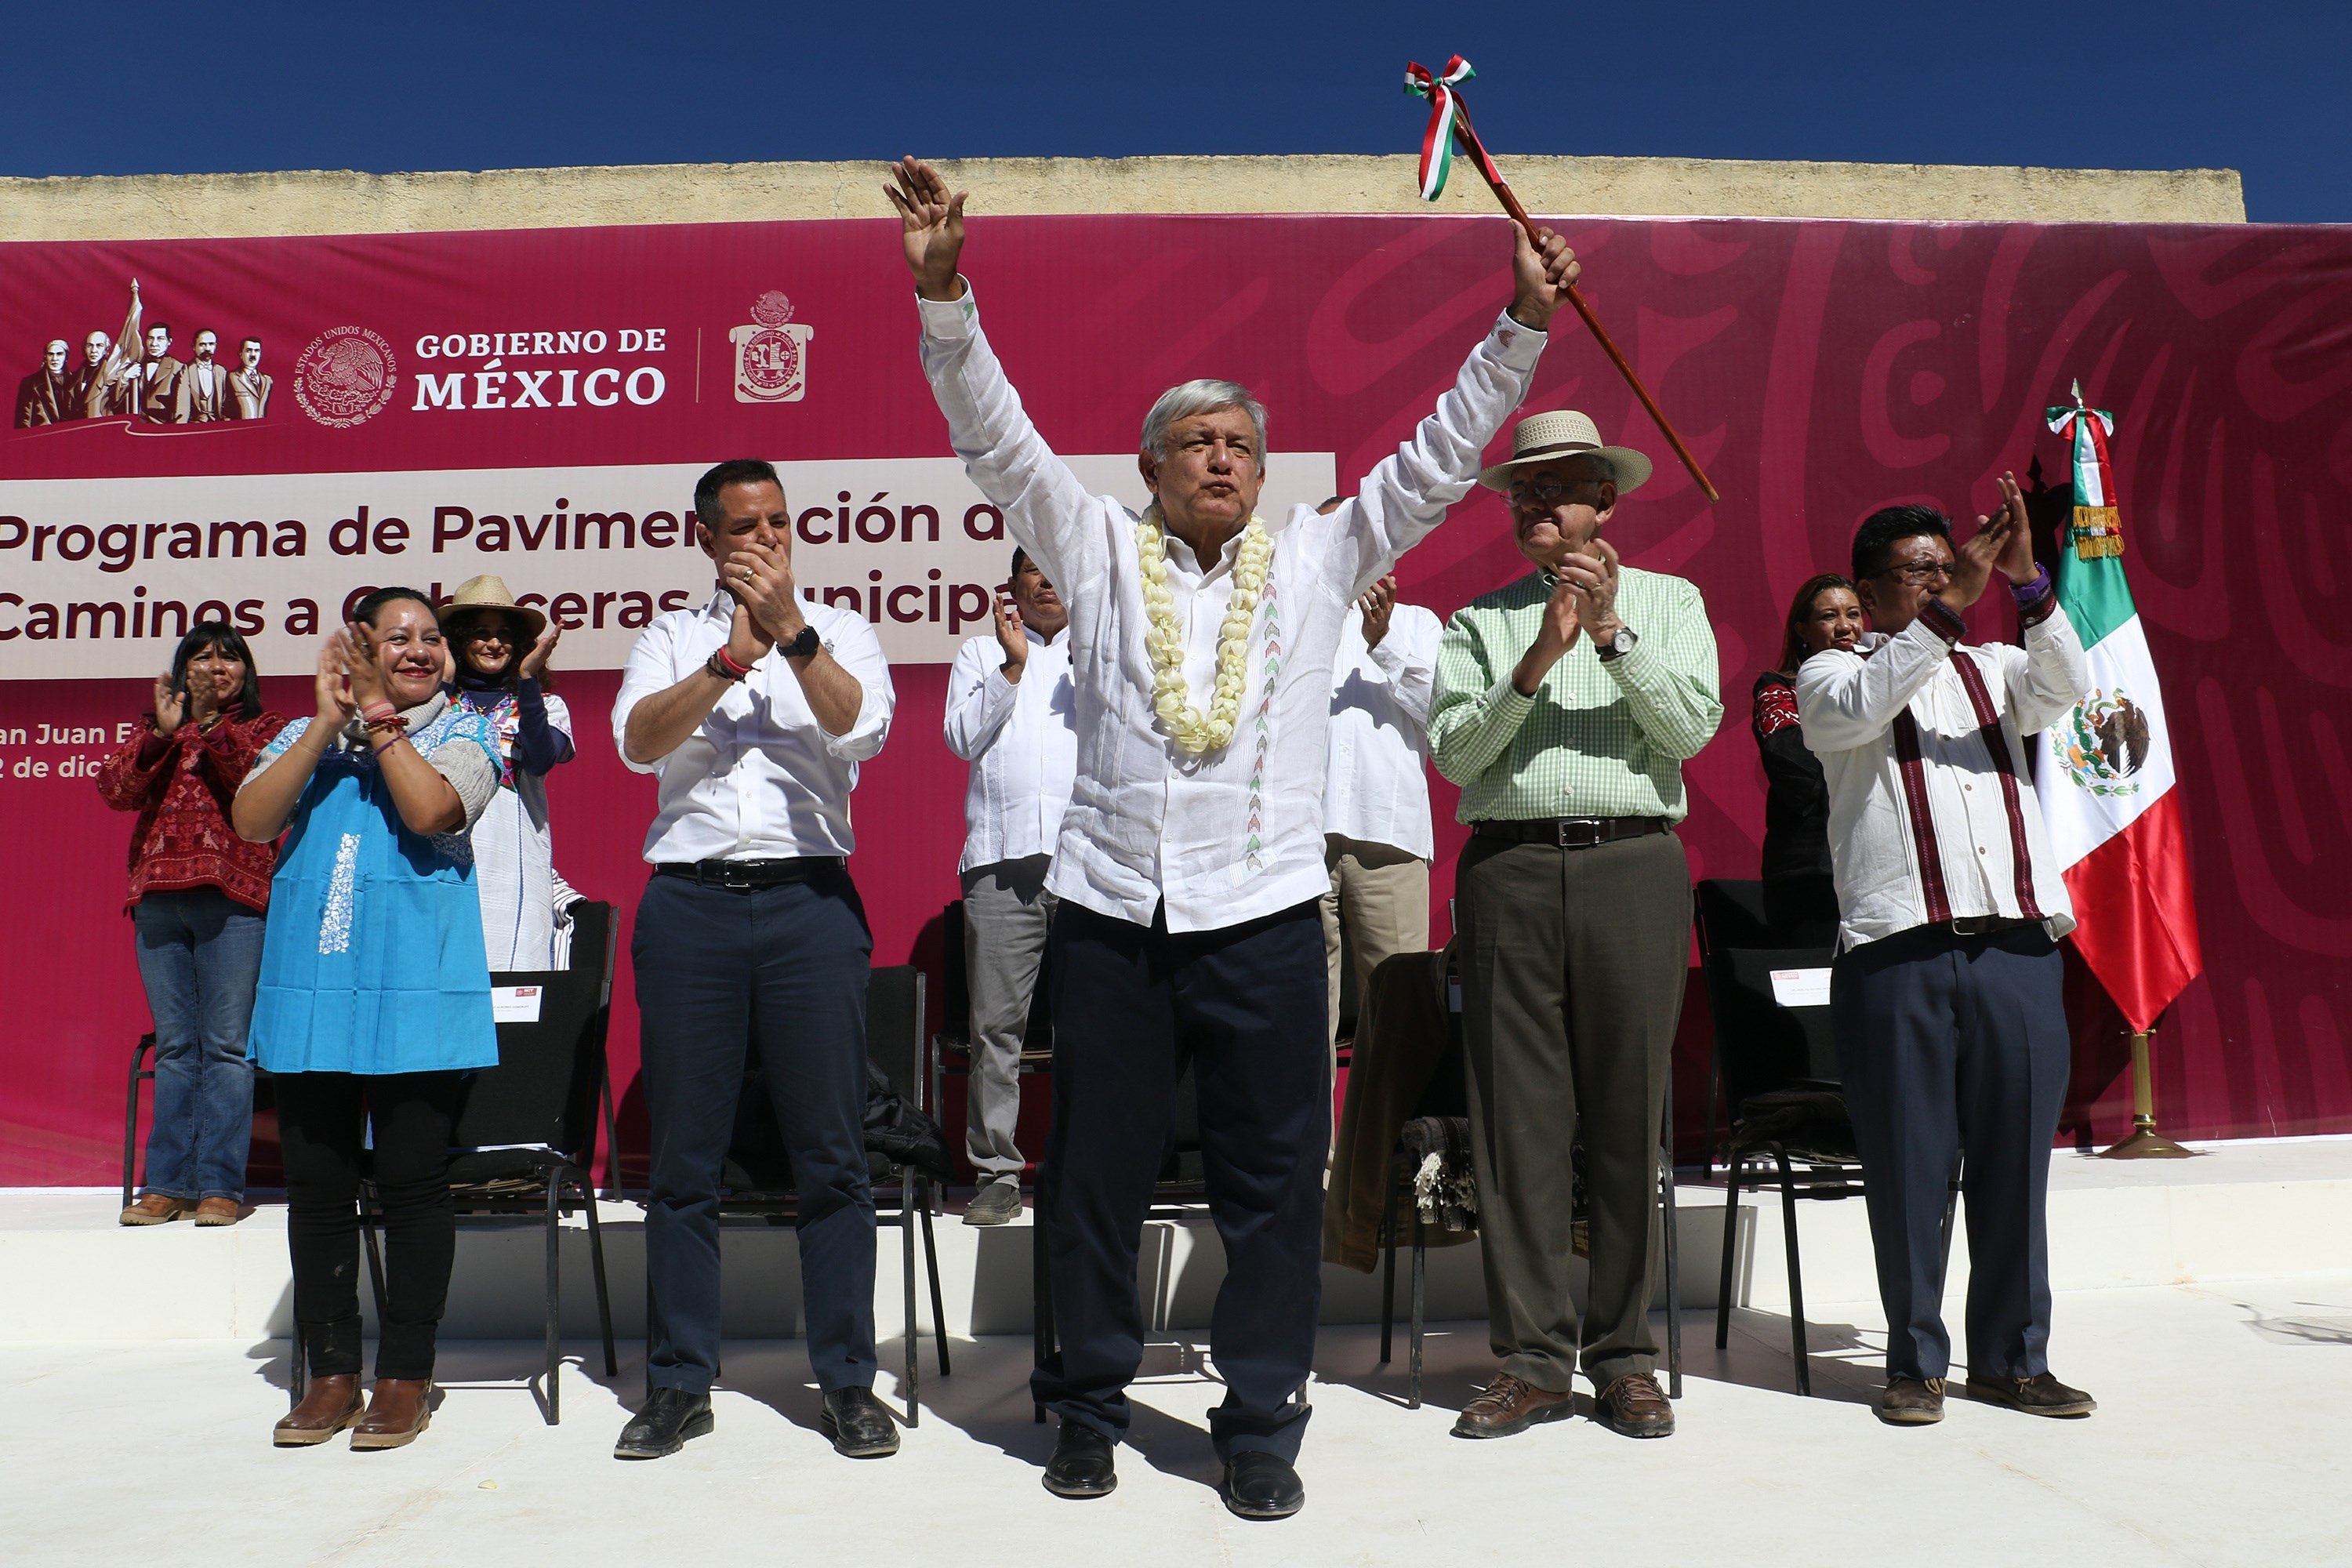  López Obrador elogia forma de gobierno de comunidades indígenas mexicanas